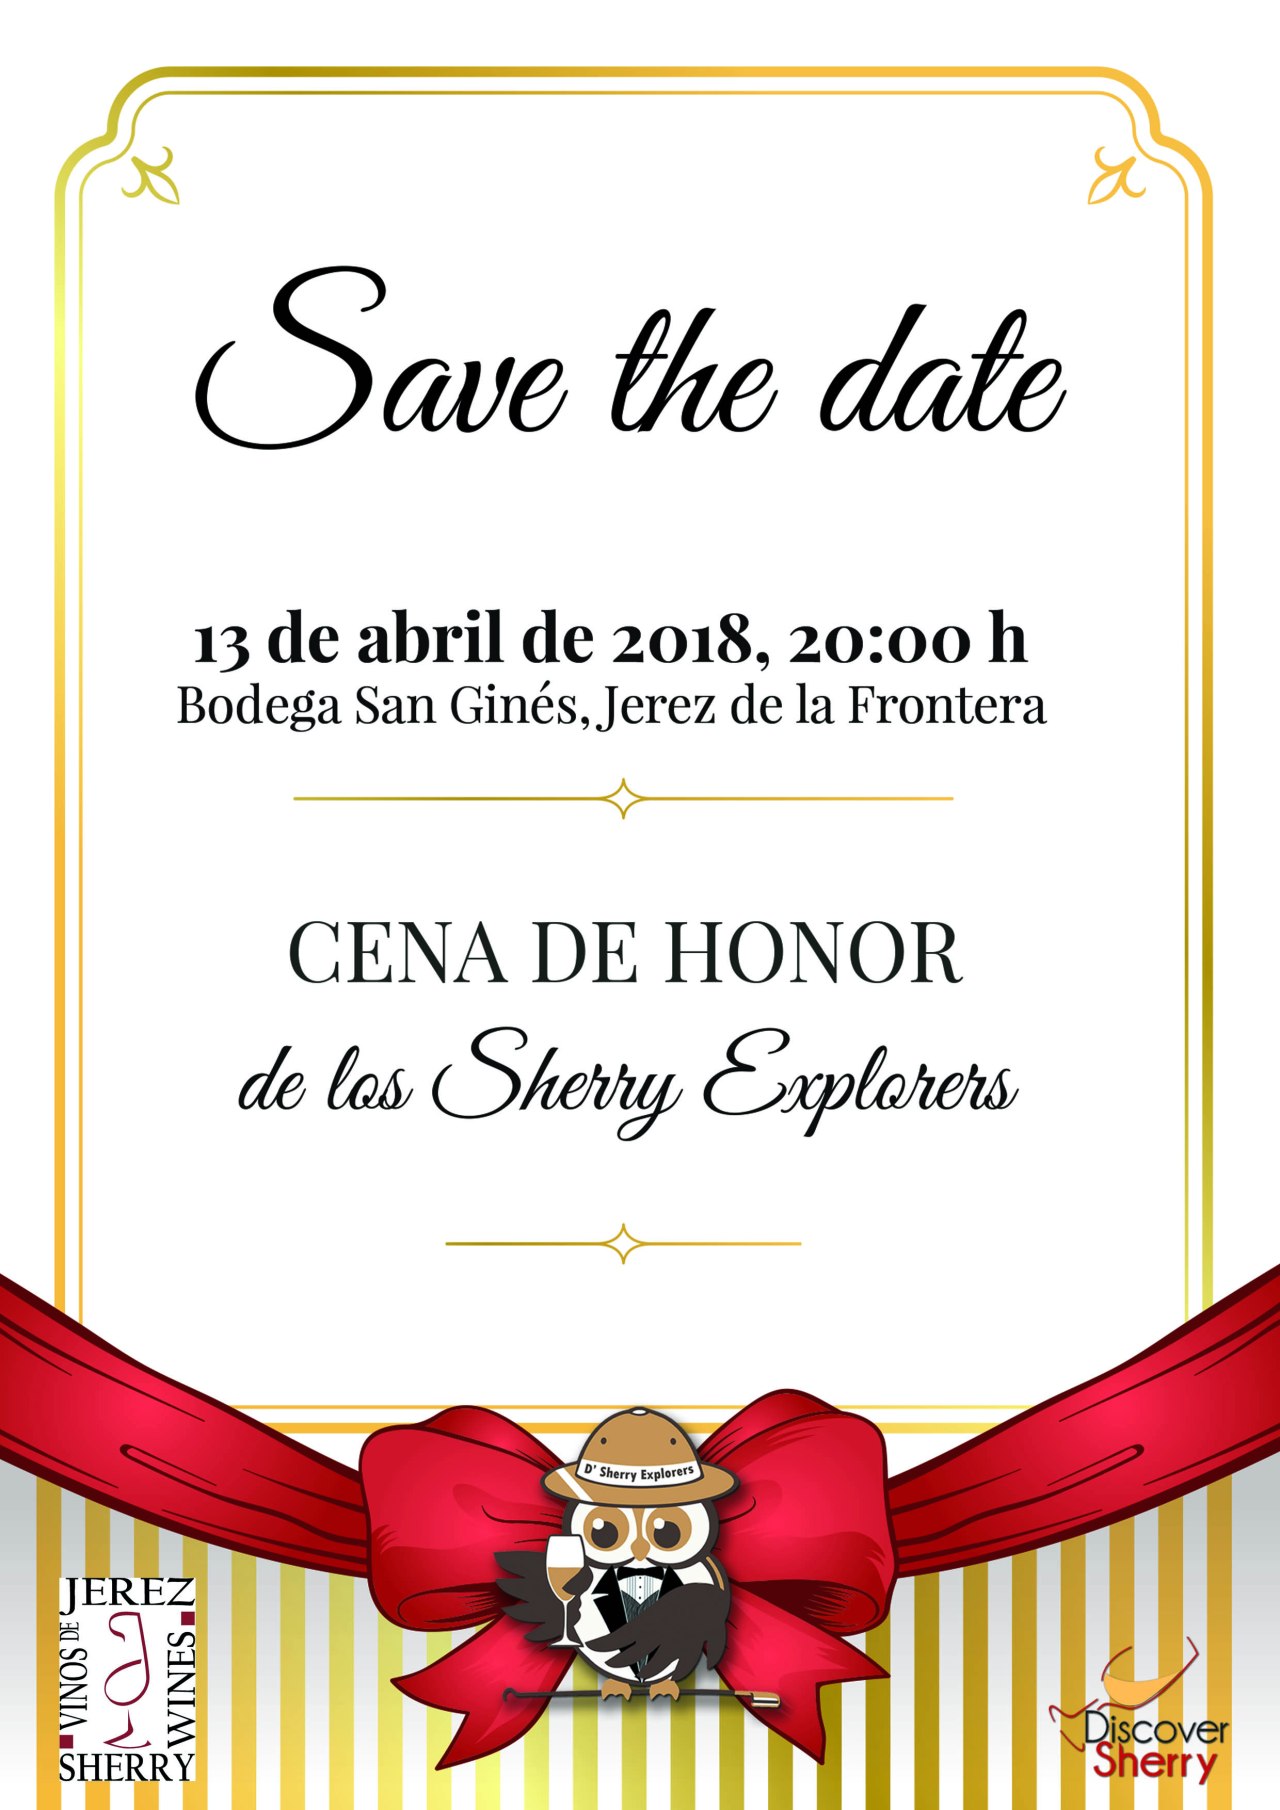 Save the date: Cena de Honor de los Sherry Explorers